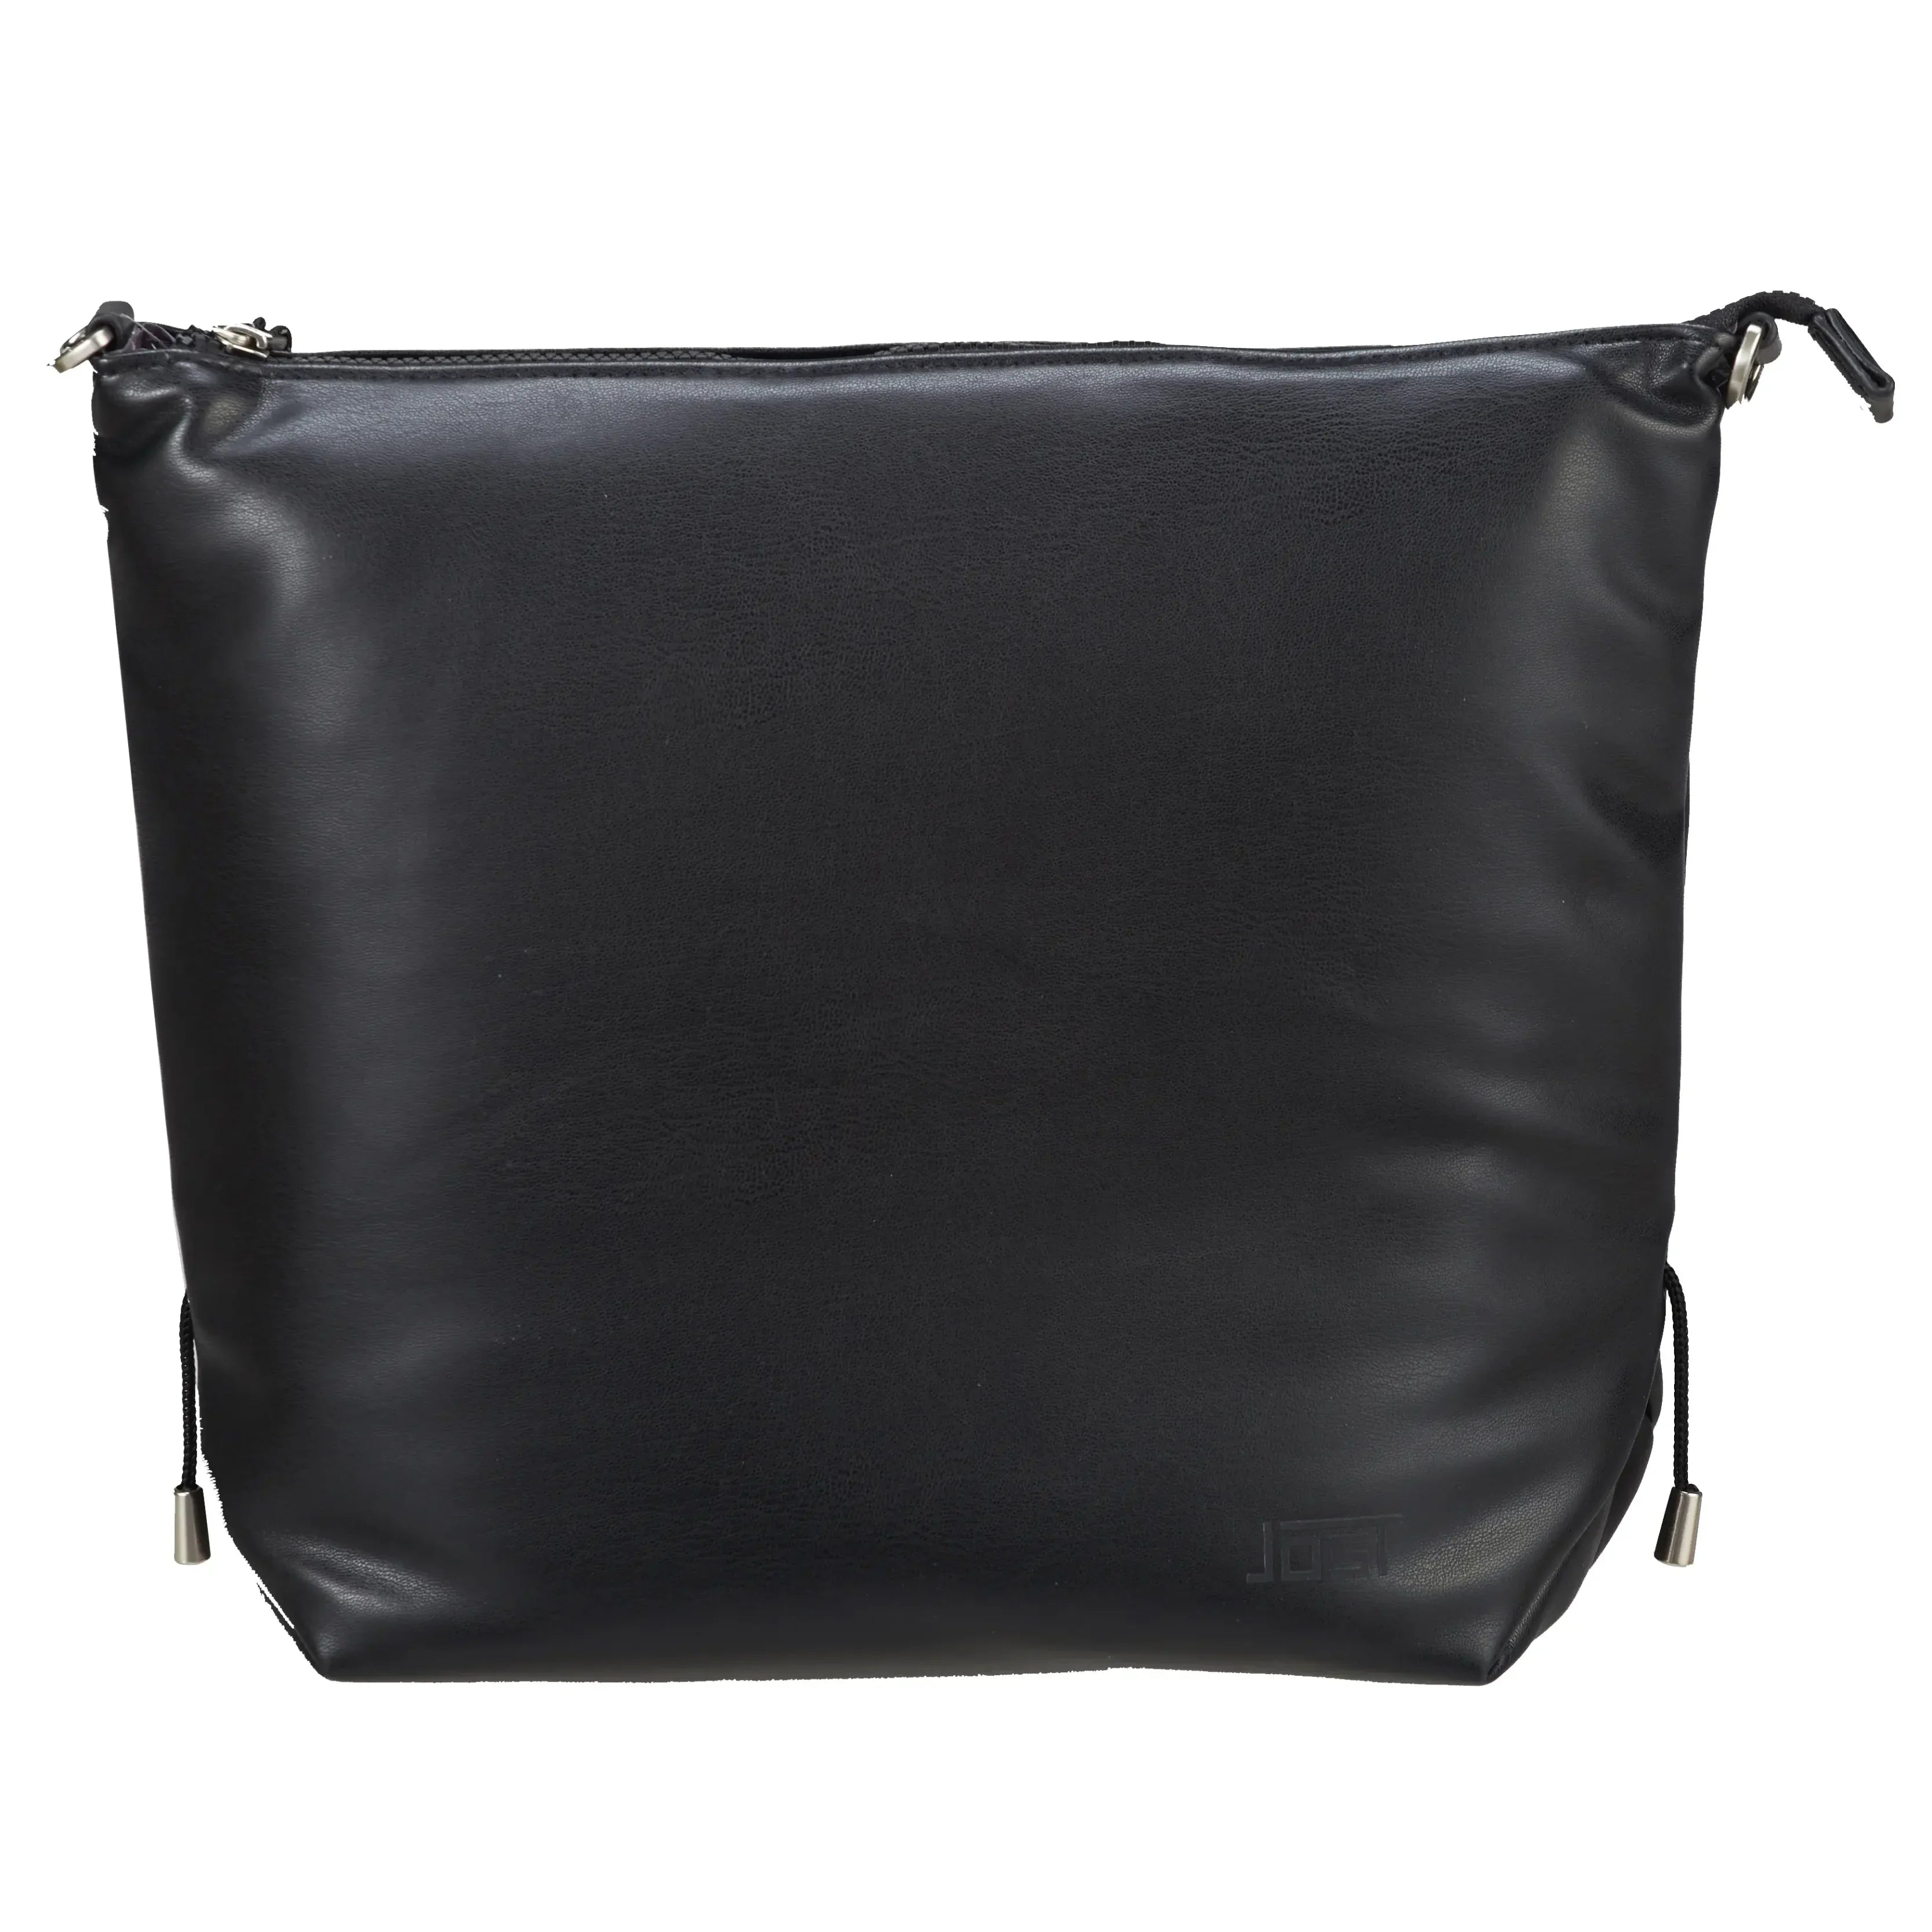 Jost Kaarina shoulder bag 37 cm - Black